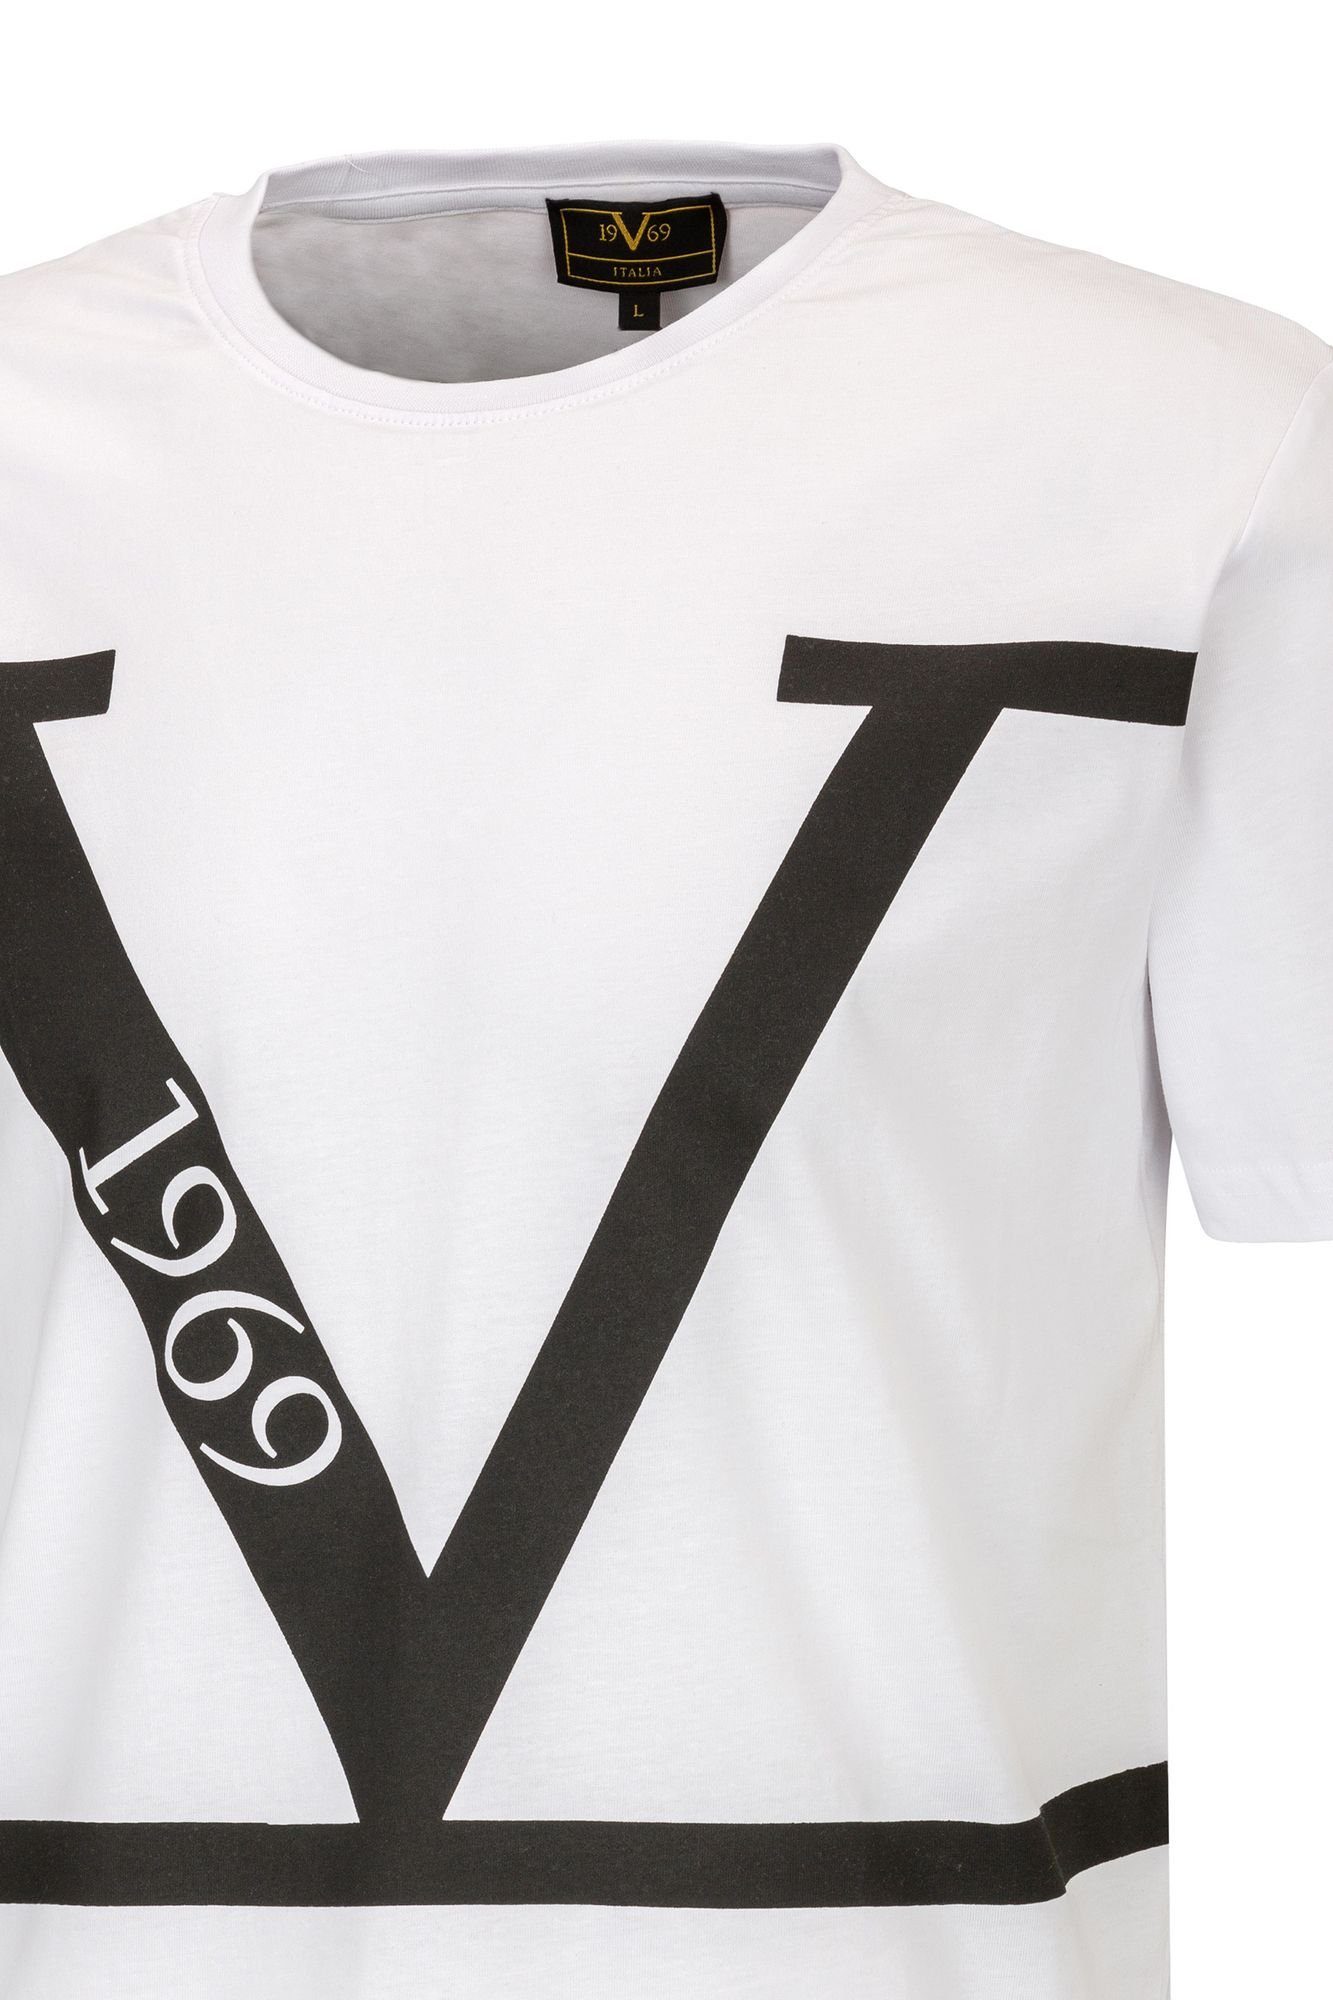 by Italia Gabriel 19V69 Versace T-Shirt